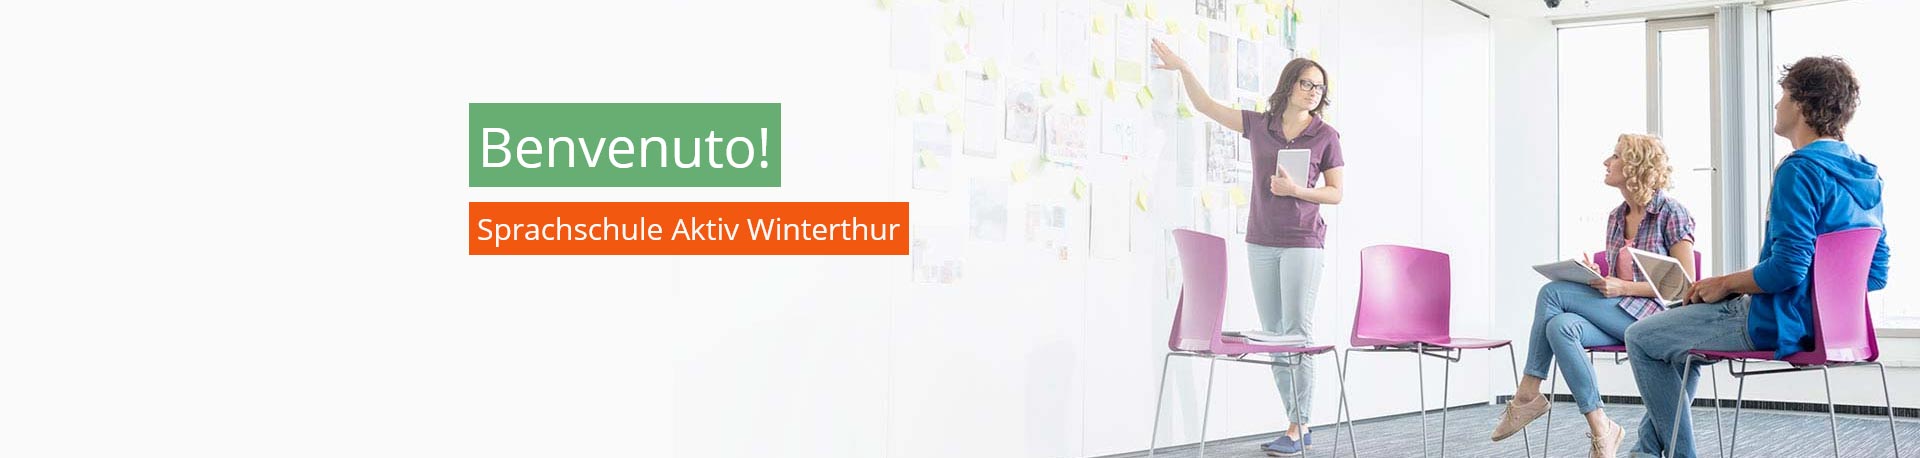 Imparare il tedesco a Winterthur – Corsi di tedesco da A1 a C2